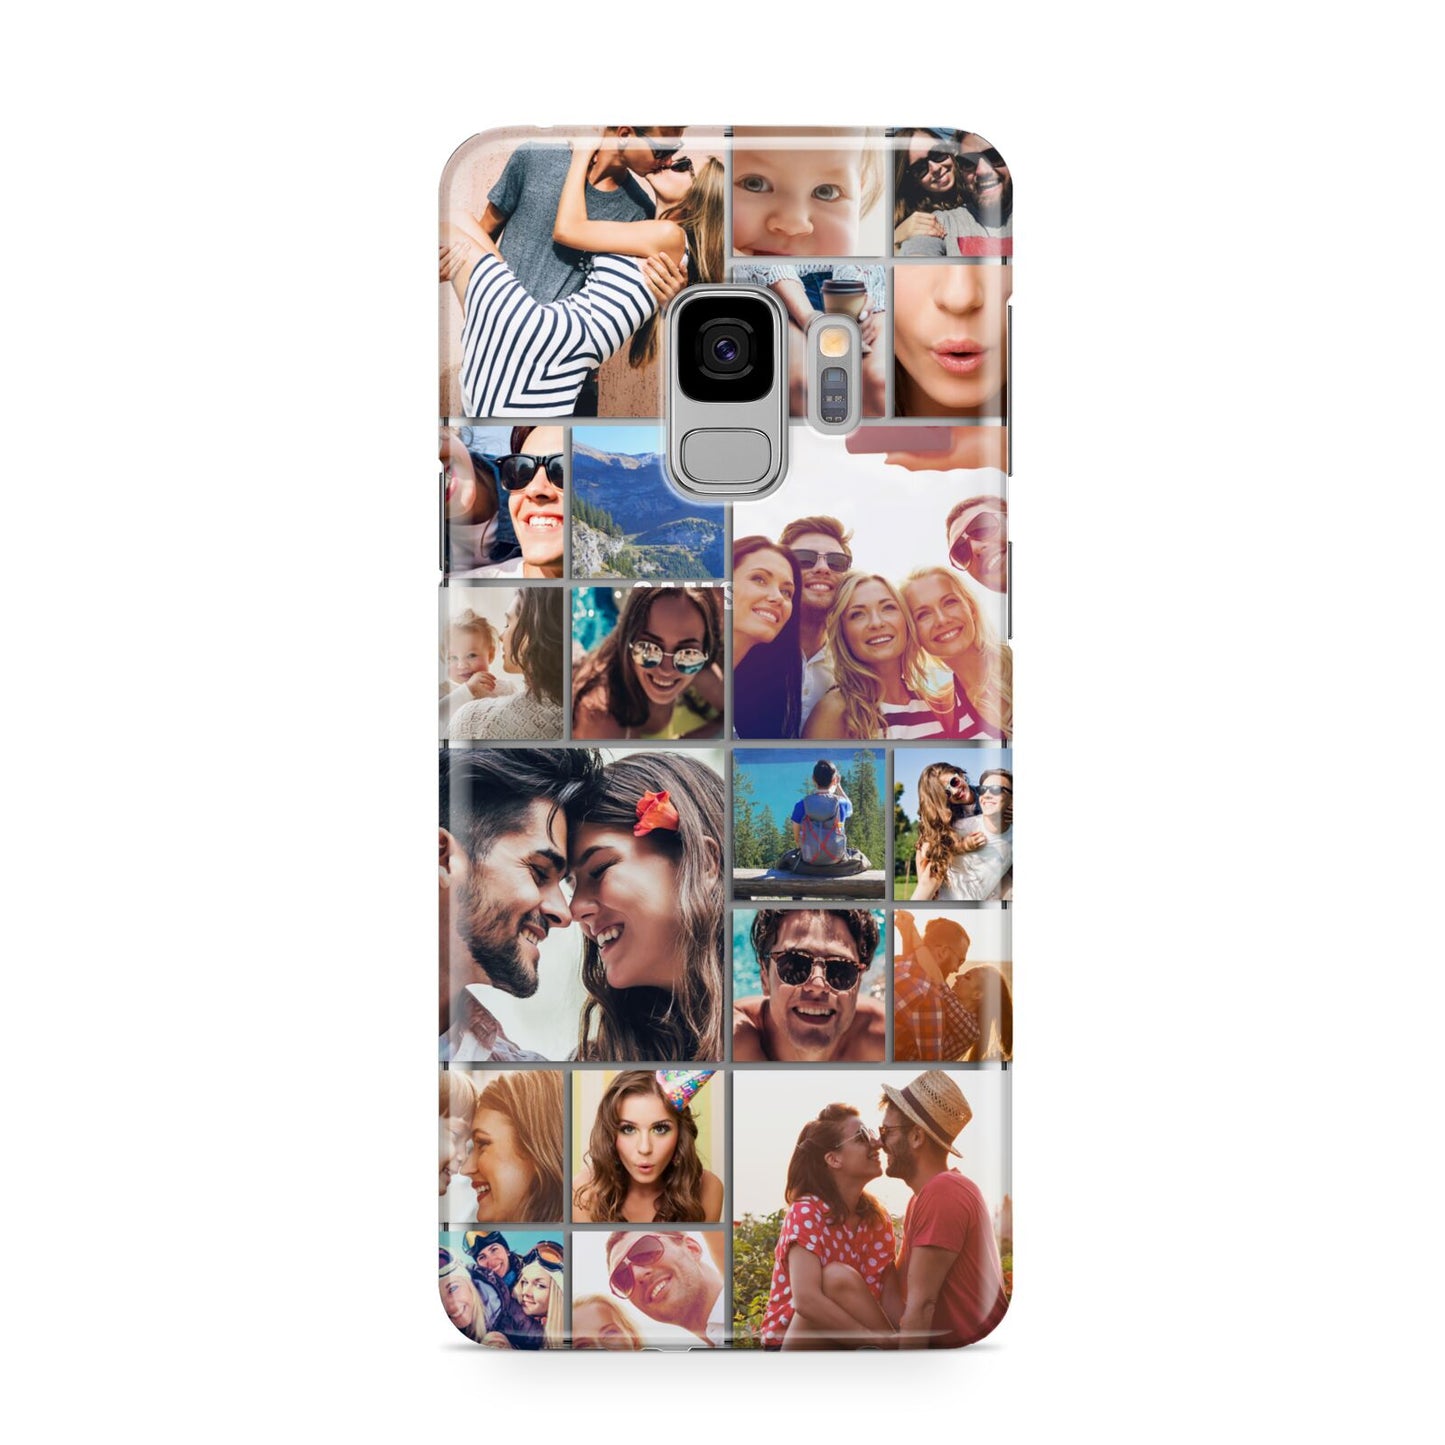 Photo Grid Samsung Galaxy S9 Case